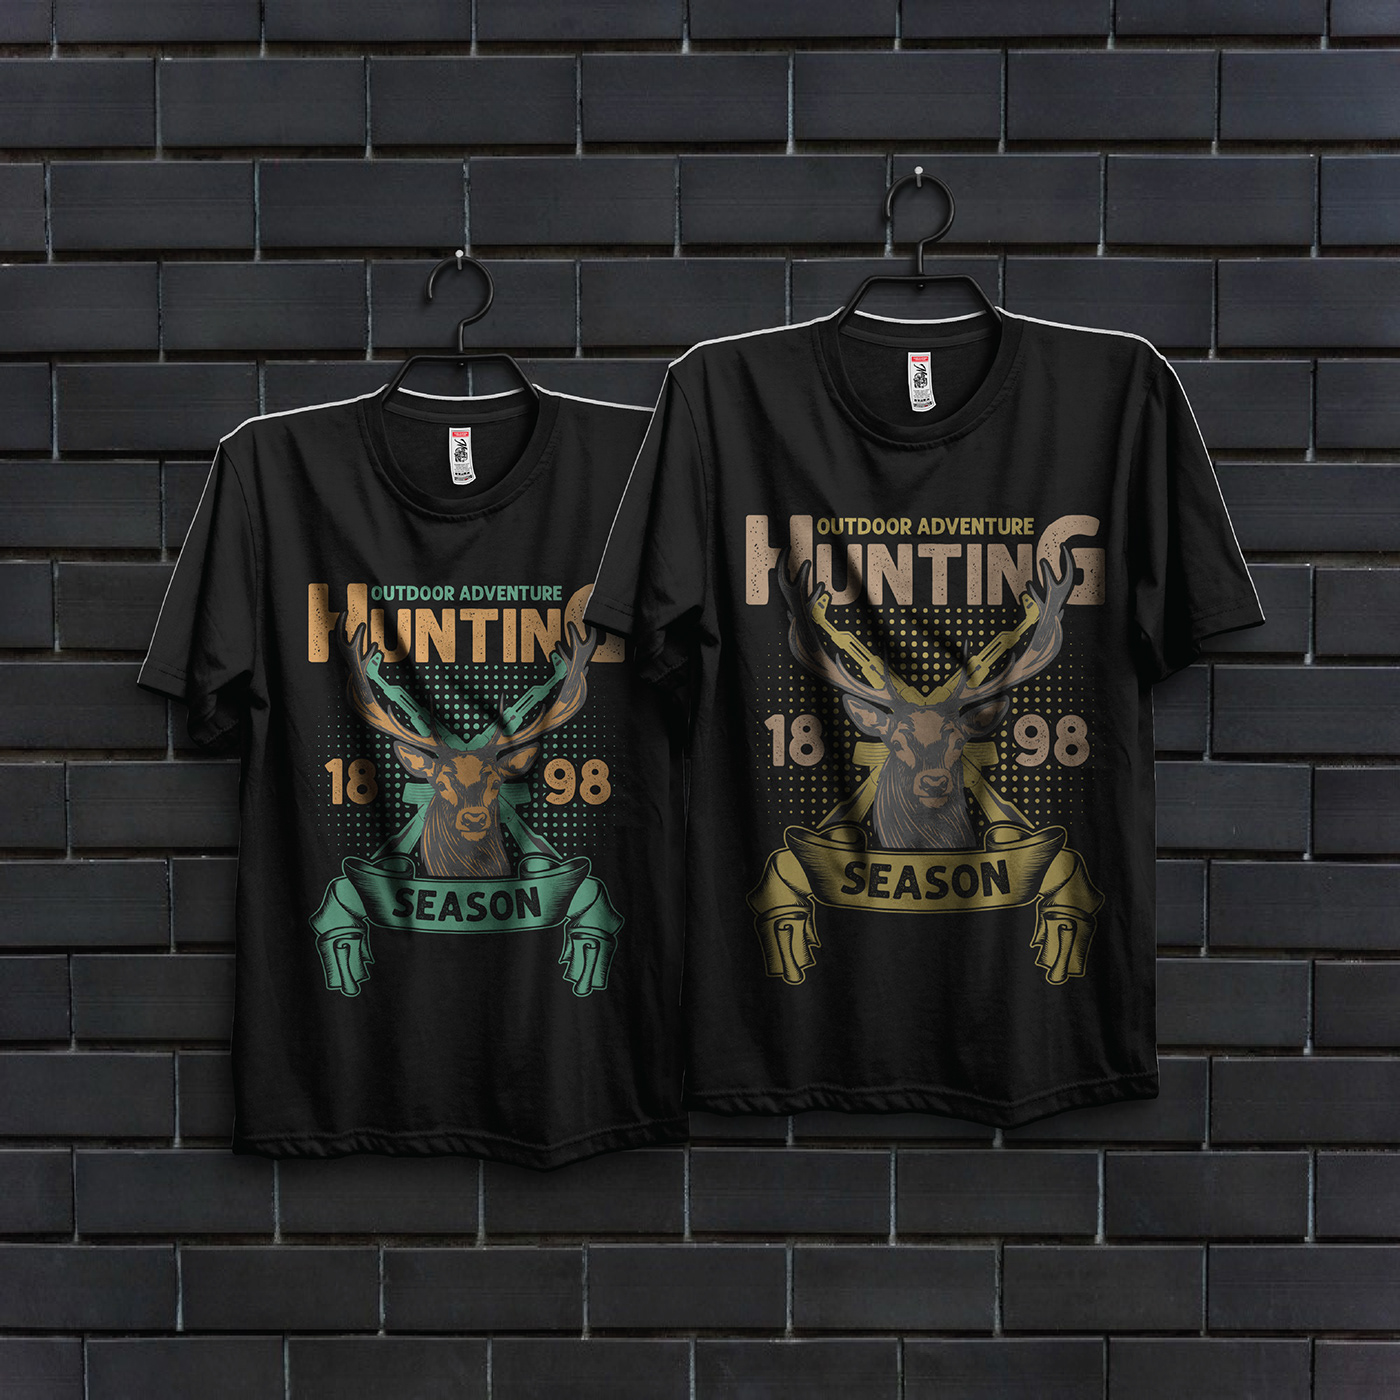 HUnting t-shirt design